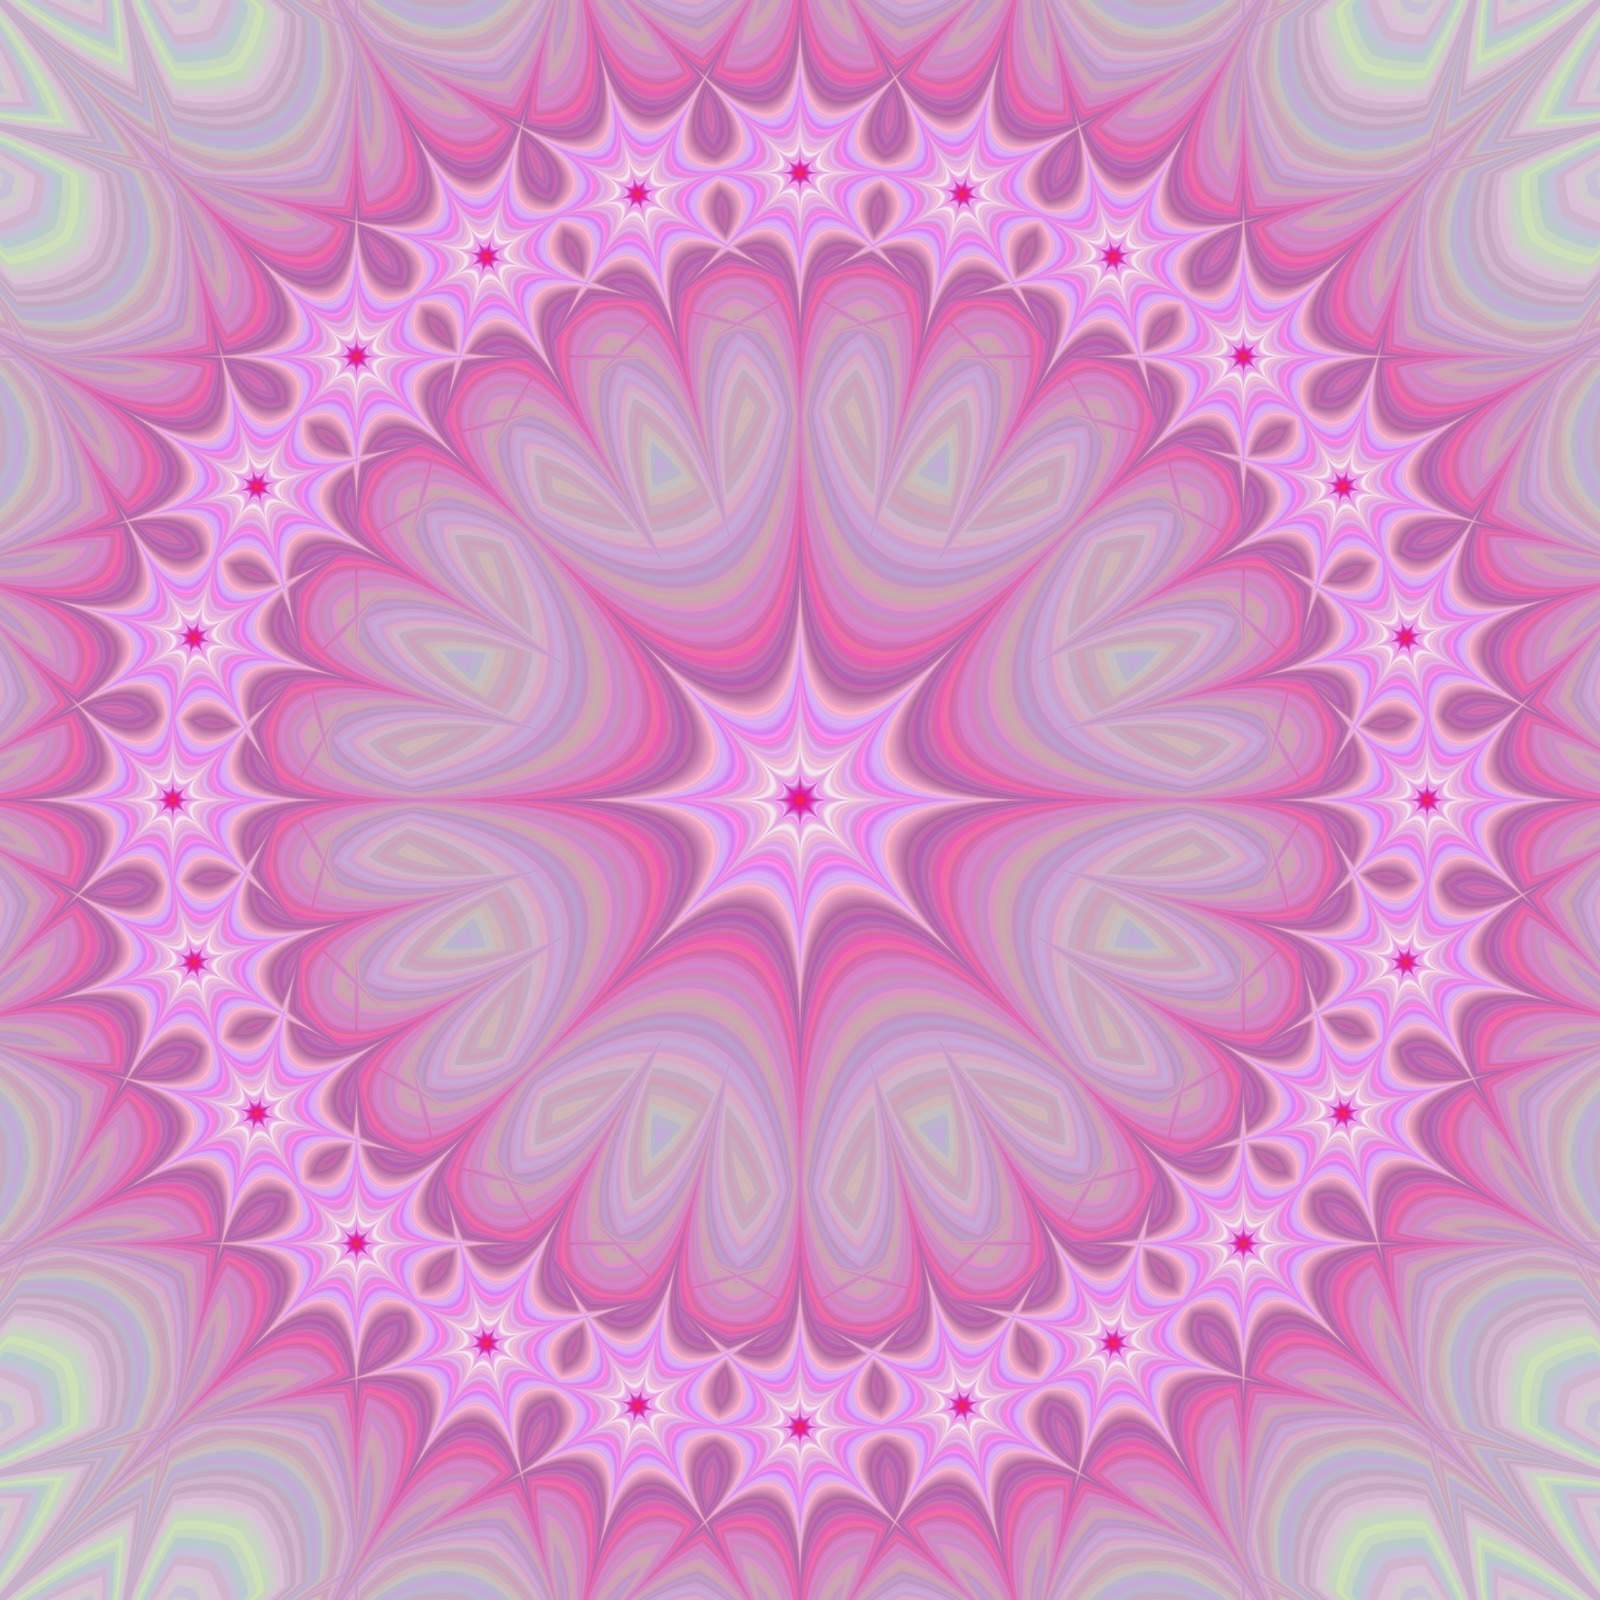 Pink girly mandala fractal design background by davidzydd